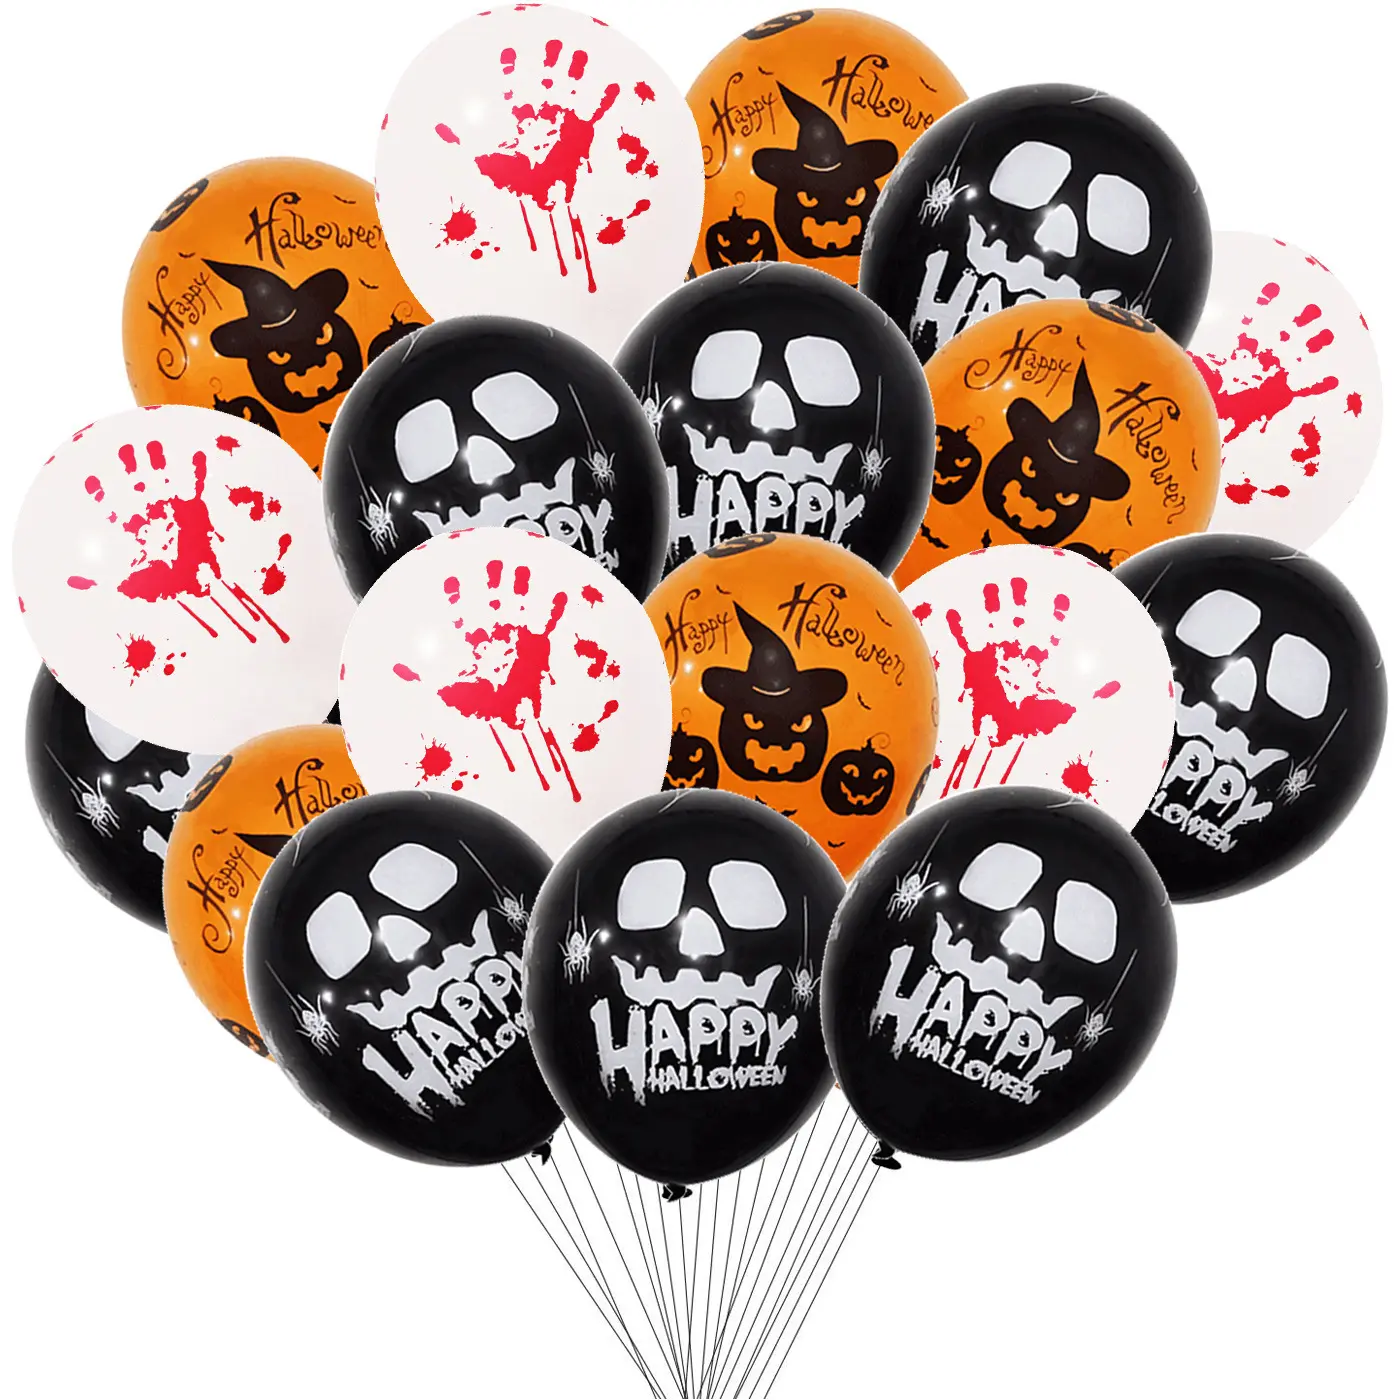 Promotional Happy Halloween Balloons Black Orange Halloween Balloon Party Decorations